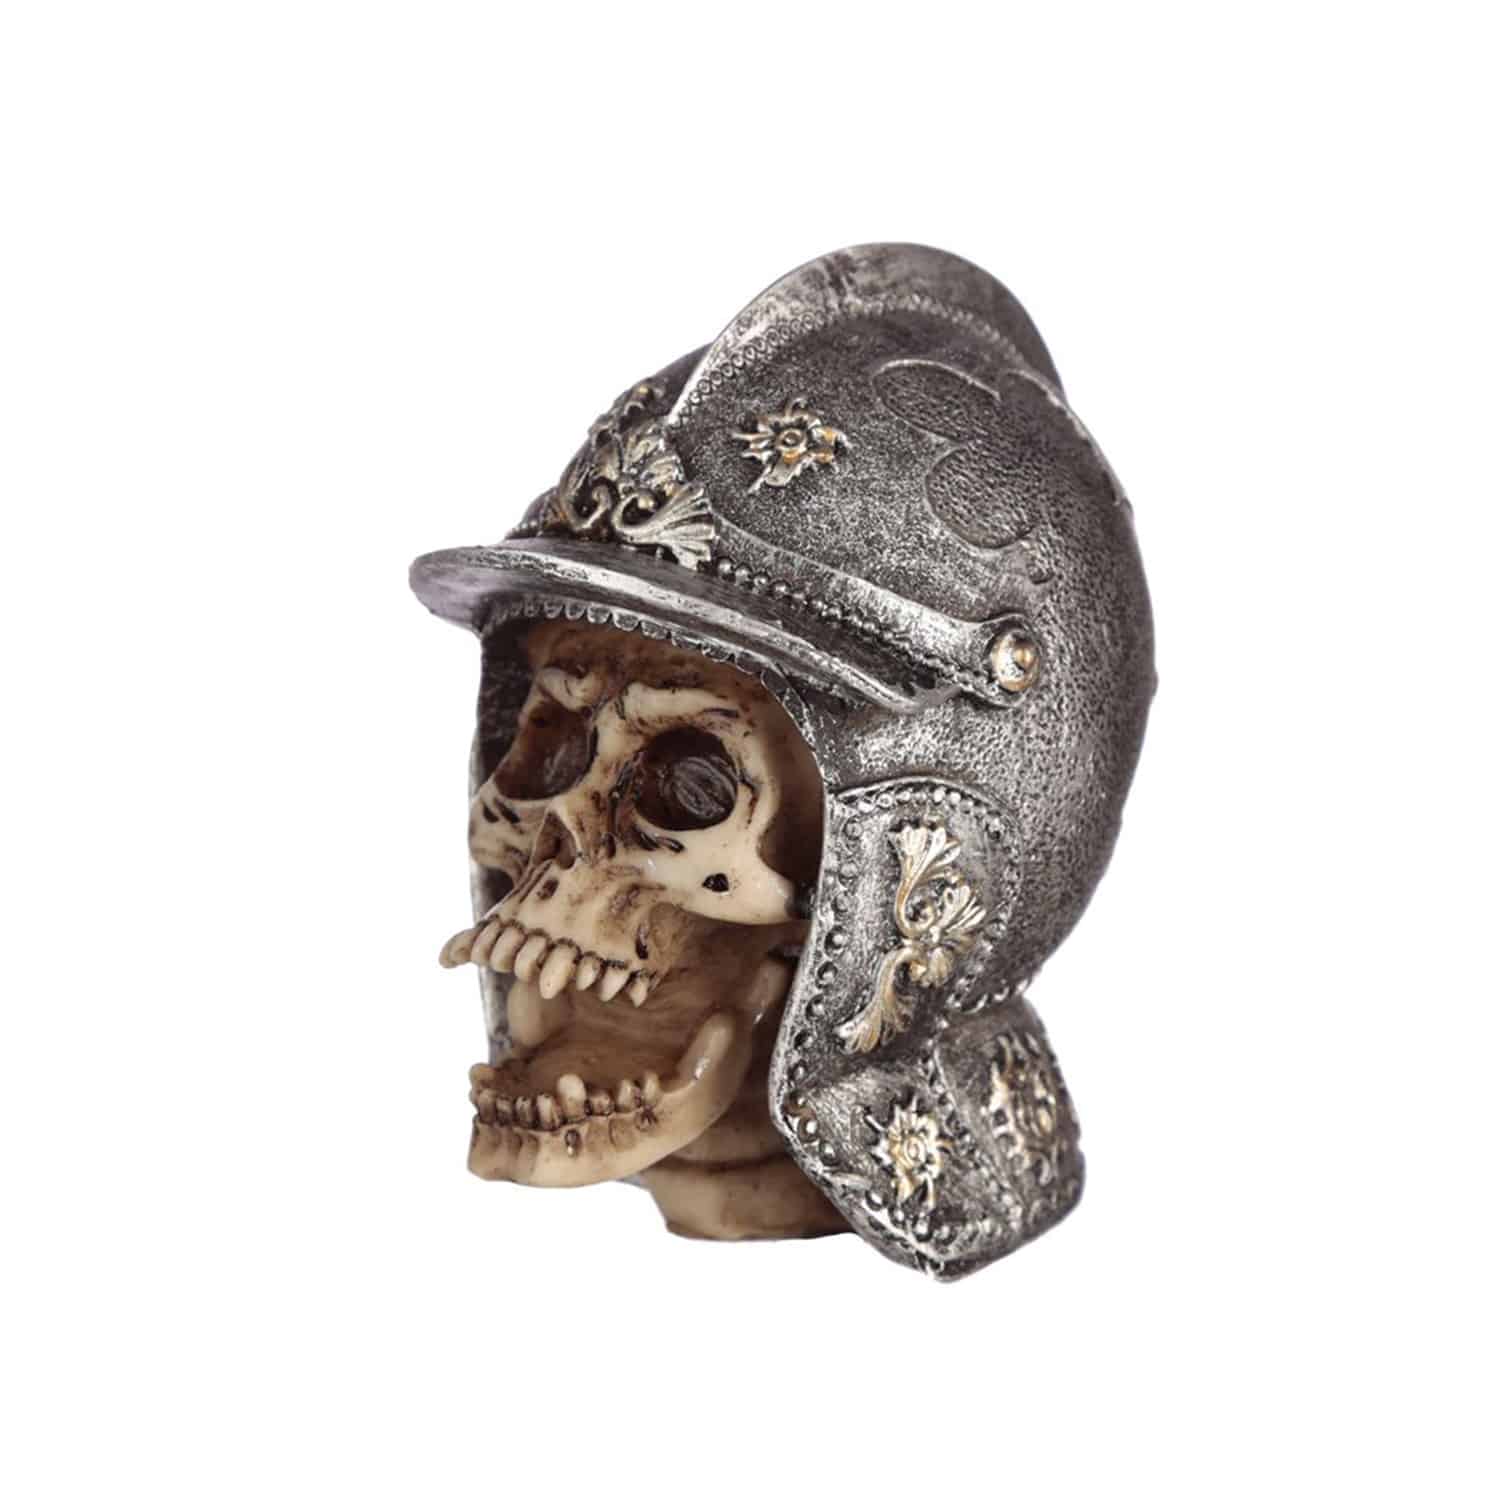 skull-with-medieval-helmet